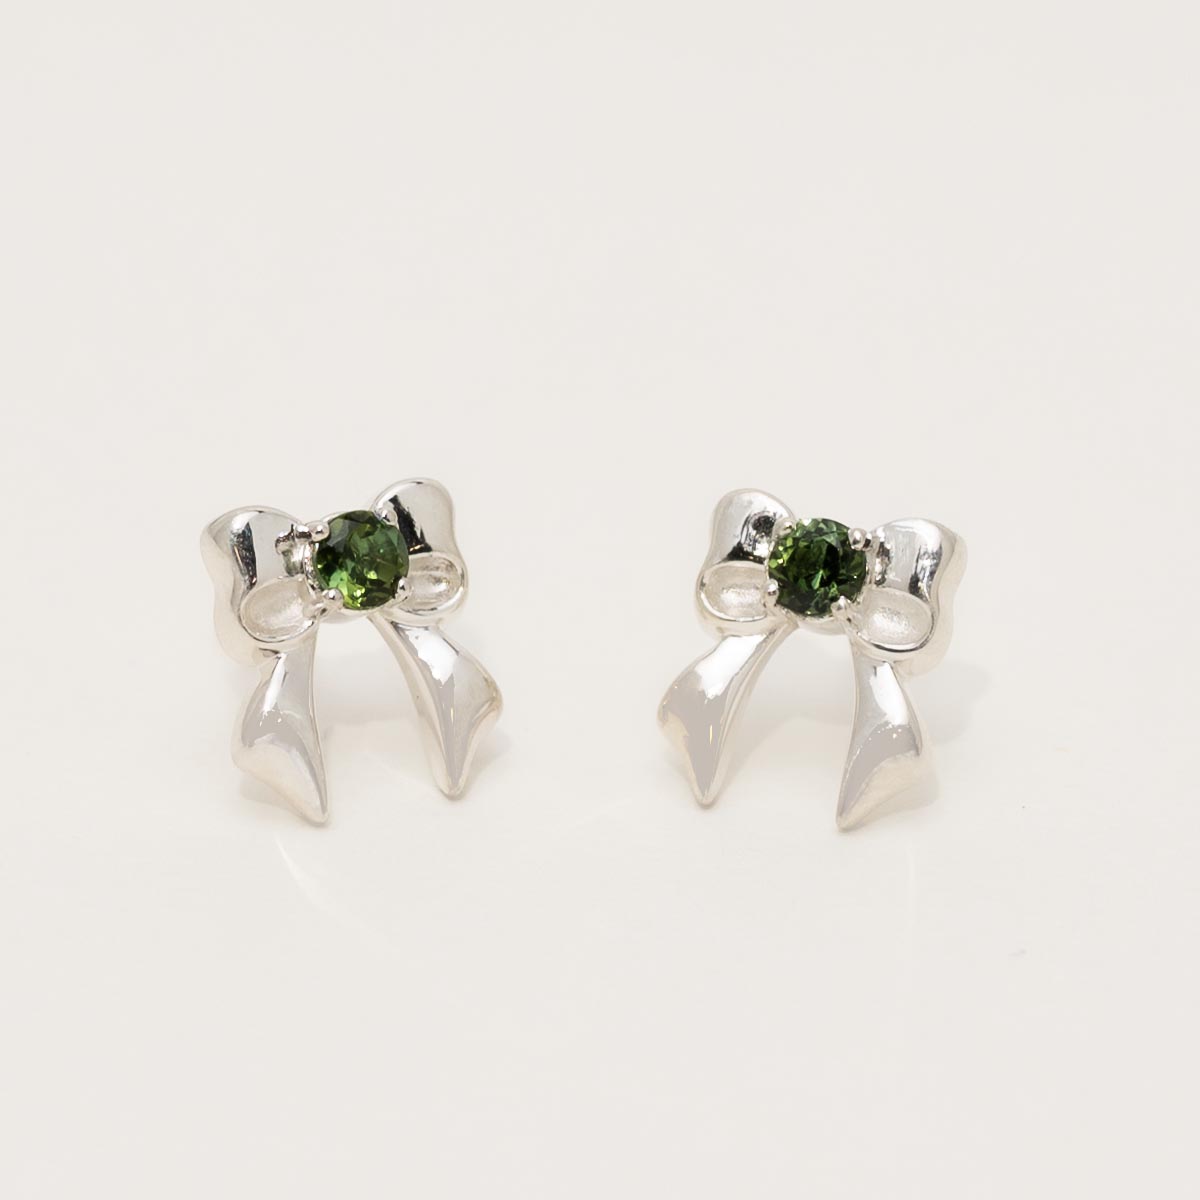 Maine Green Tourmaline Bow Stud Earrings in Sterling Silver